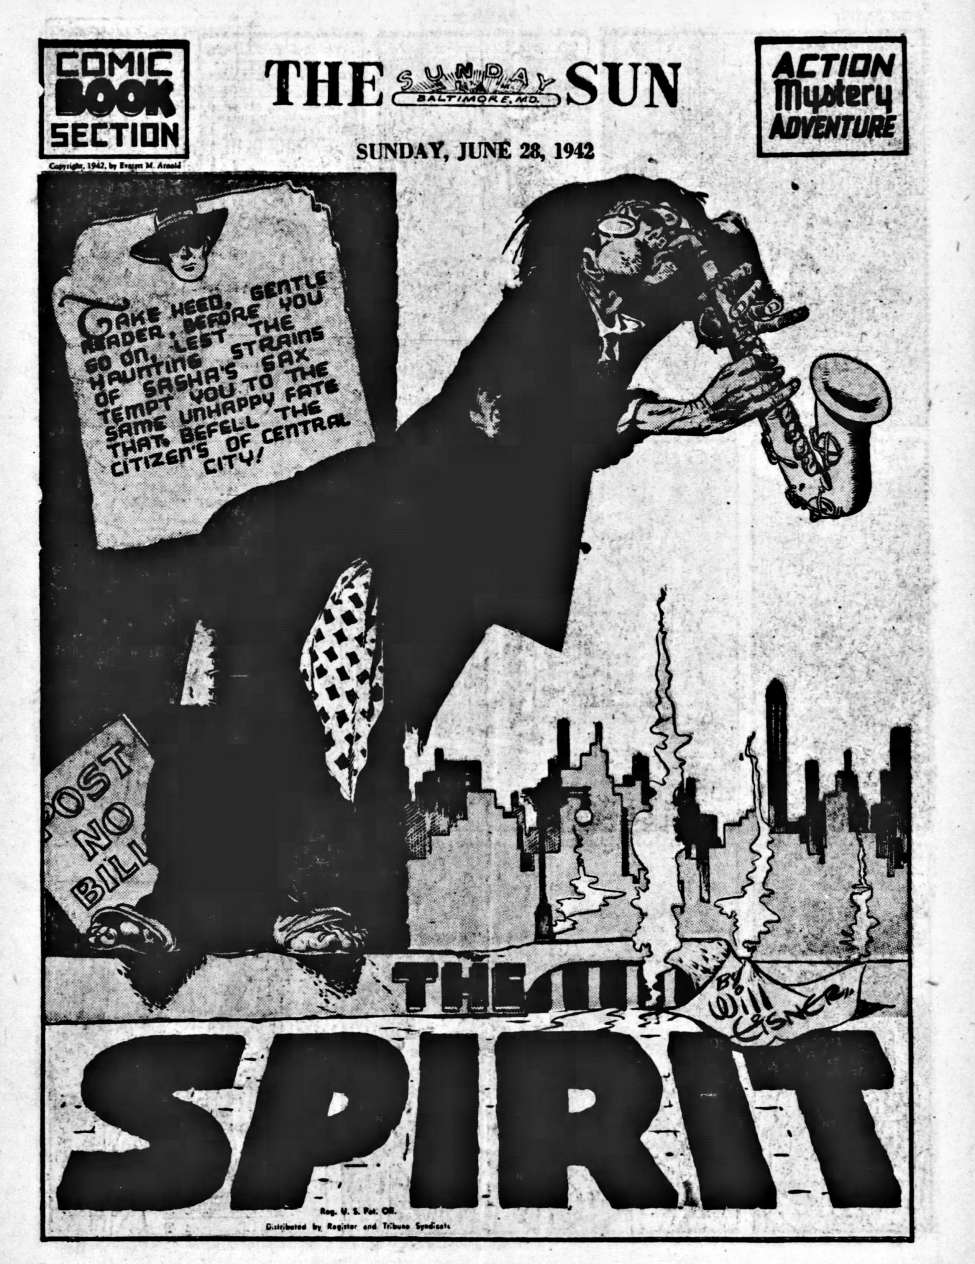 Comic Book Cover For The Spirit (1942-06-28) - Baltimore Sun (b/w)